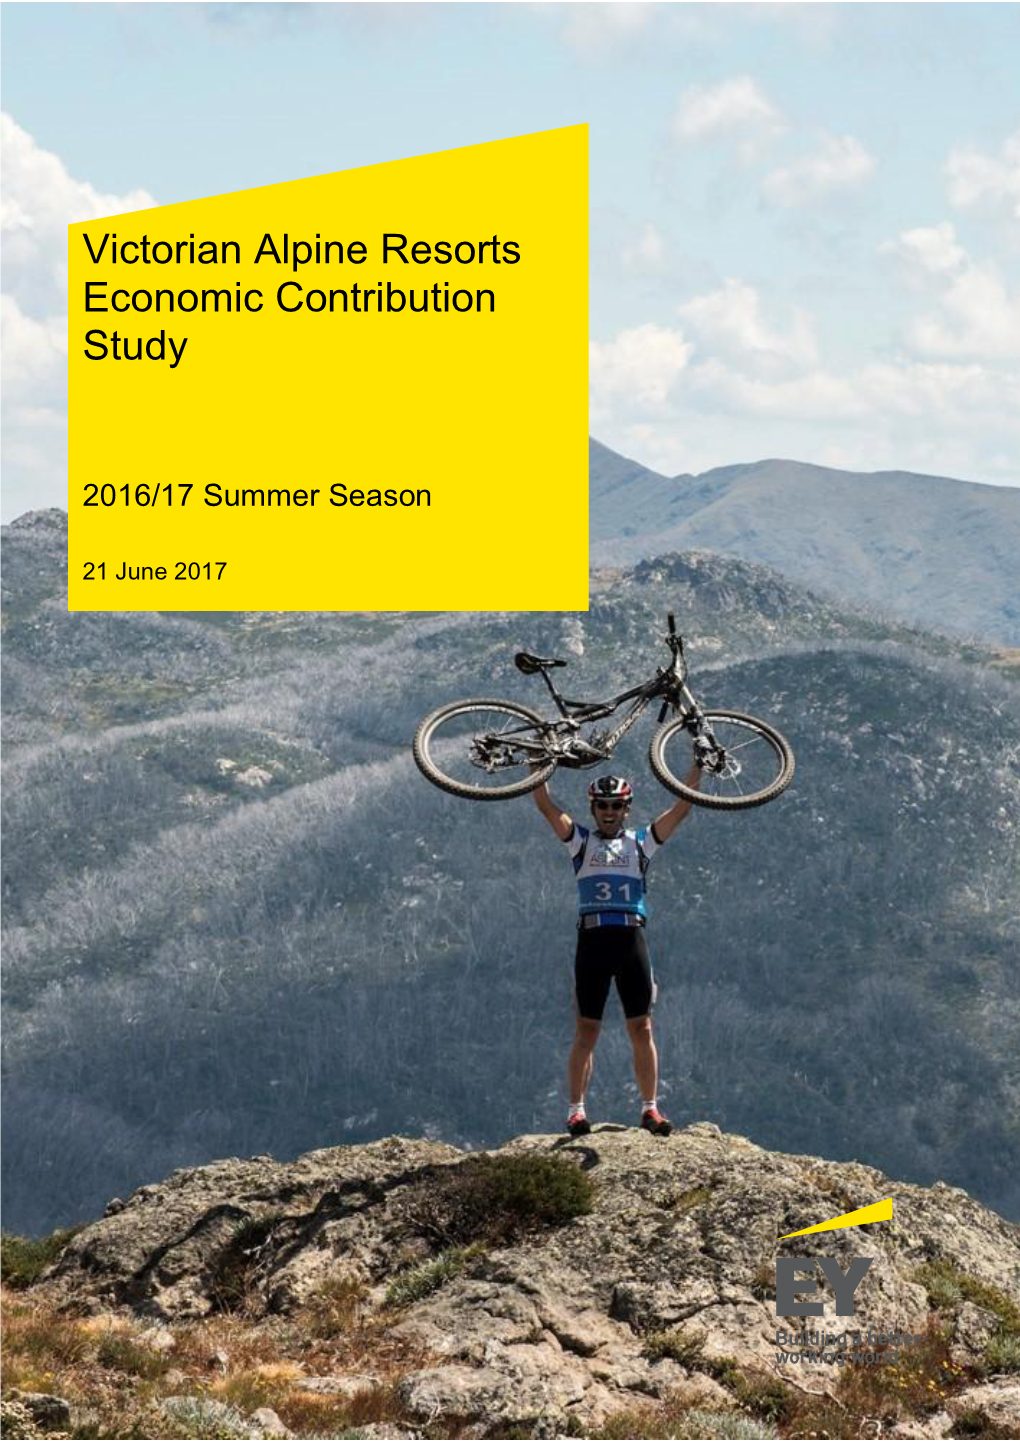 Victorian Alpine Resorts Economic Contribution Study